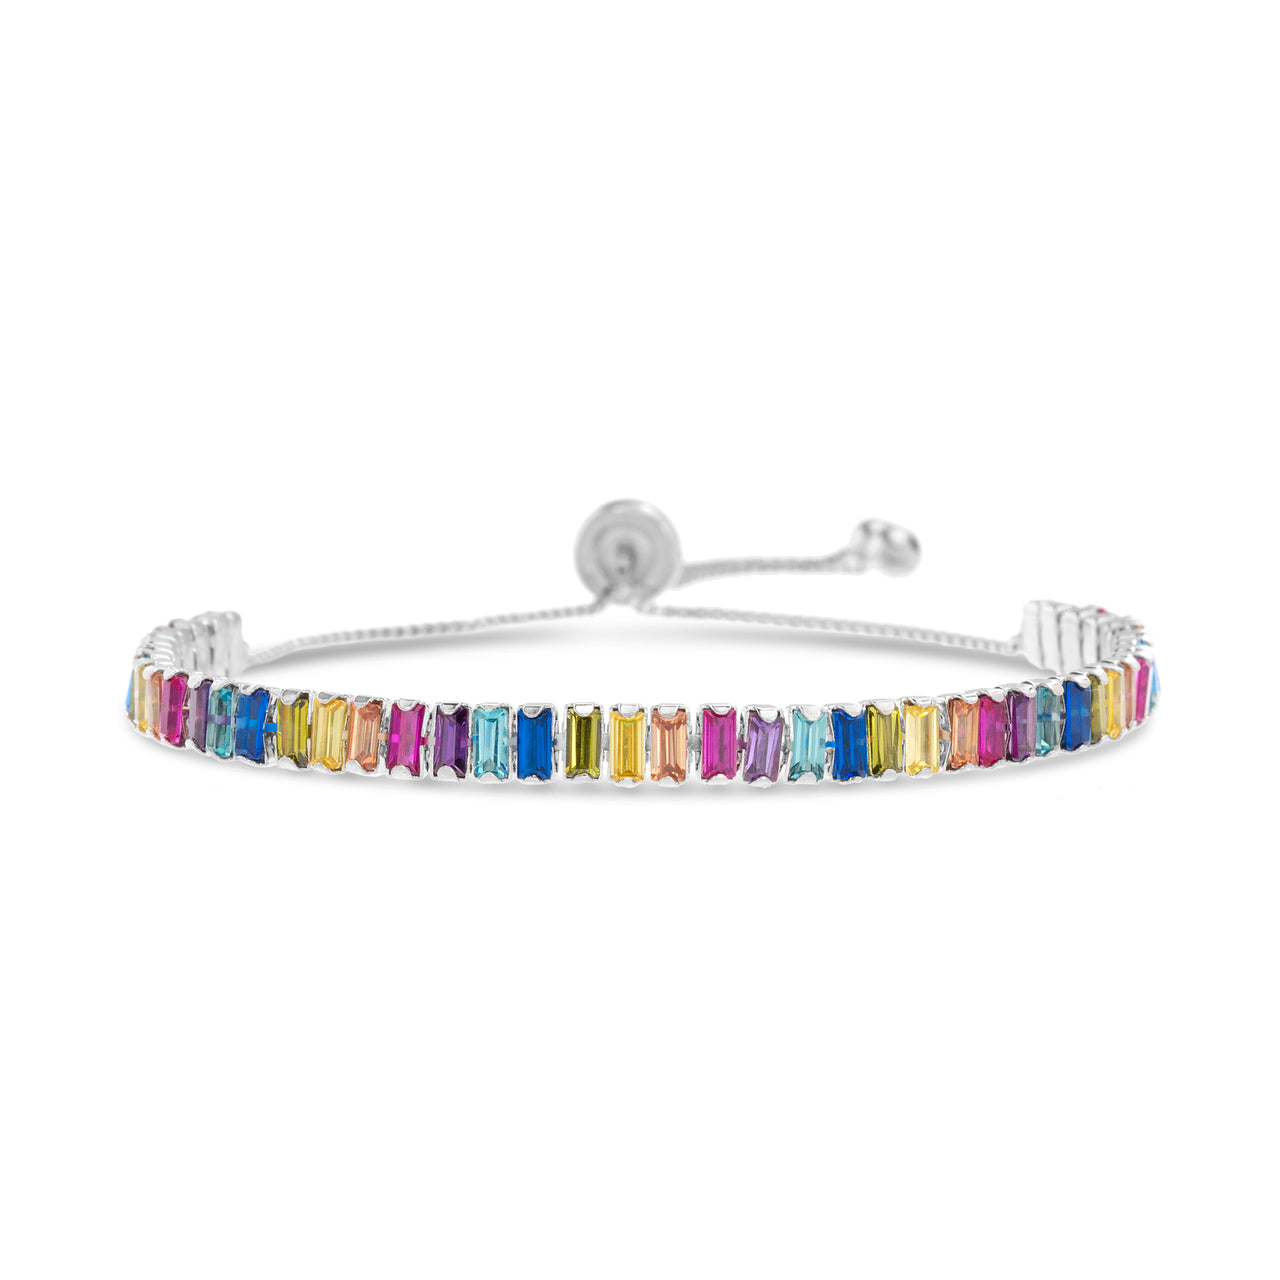 Lesa Michele Baguette Shaped Rainbow Cubic Zirconia Adjustable Tennis Bracelet in Sterling Silver